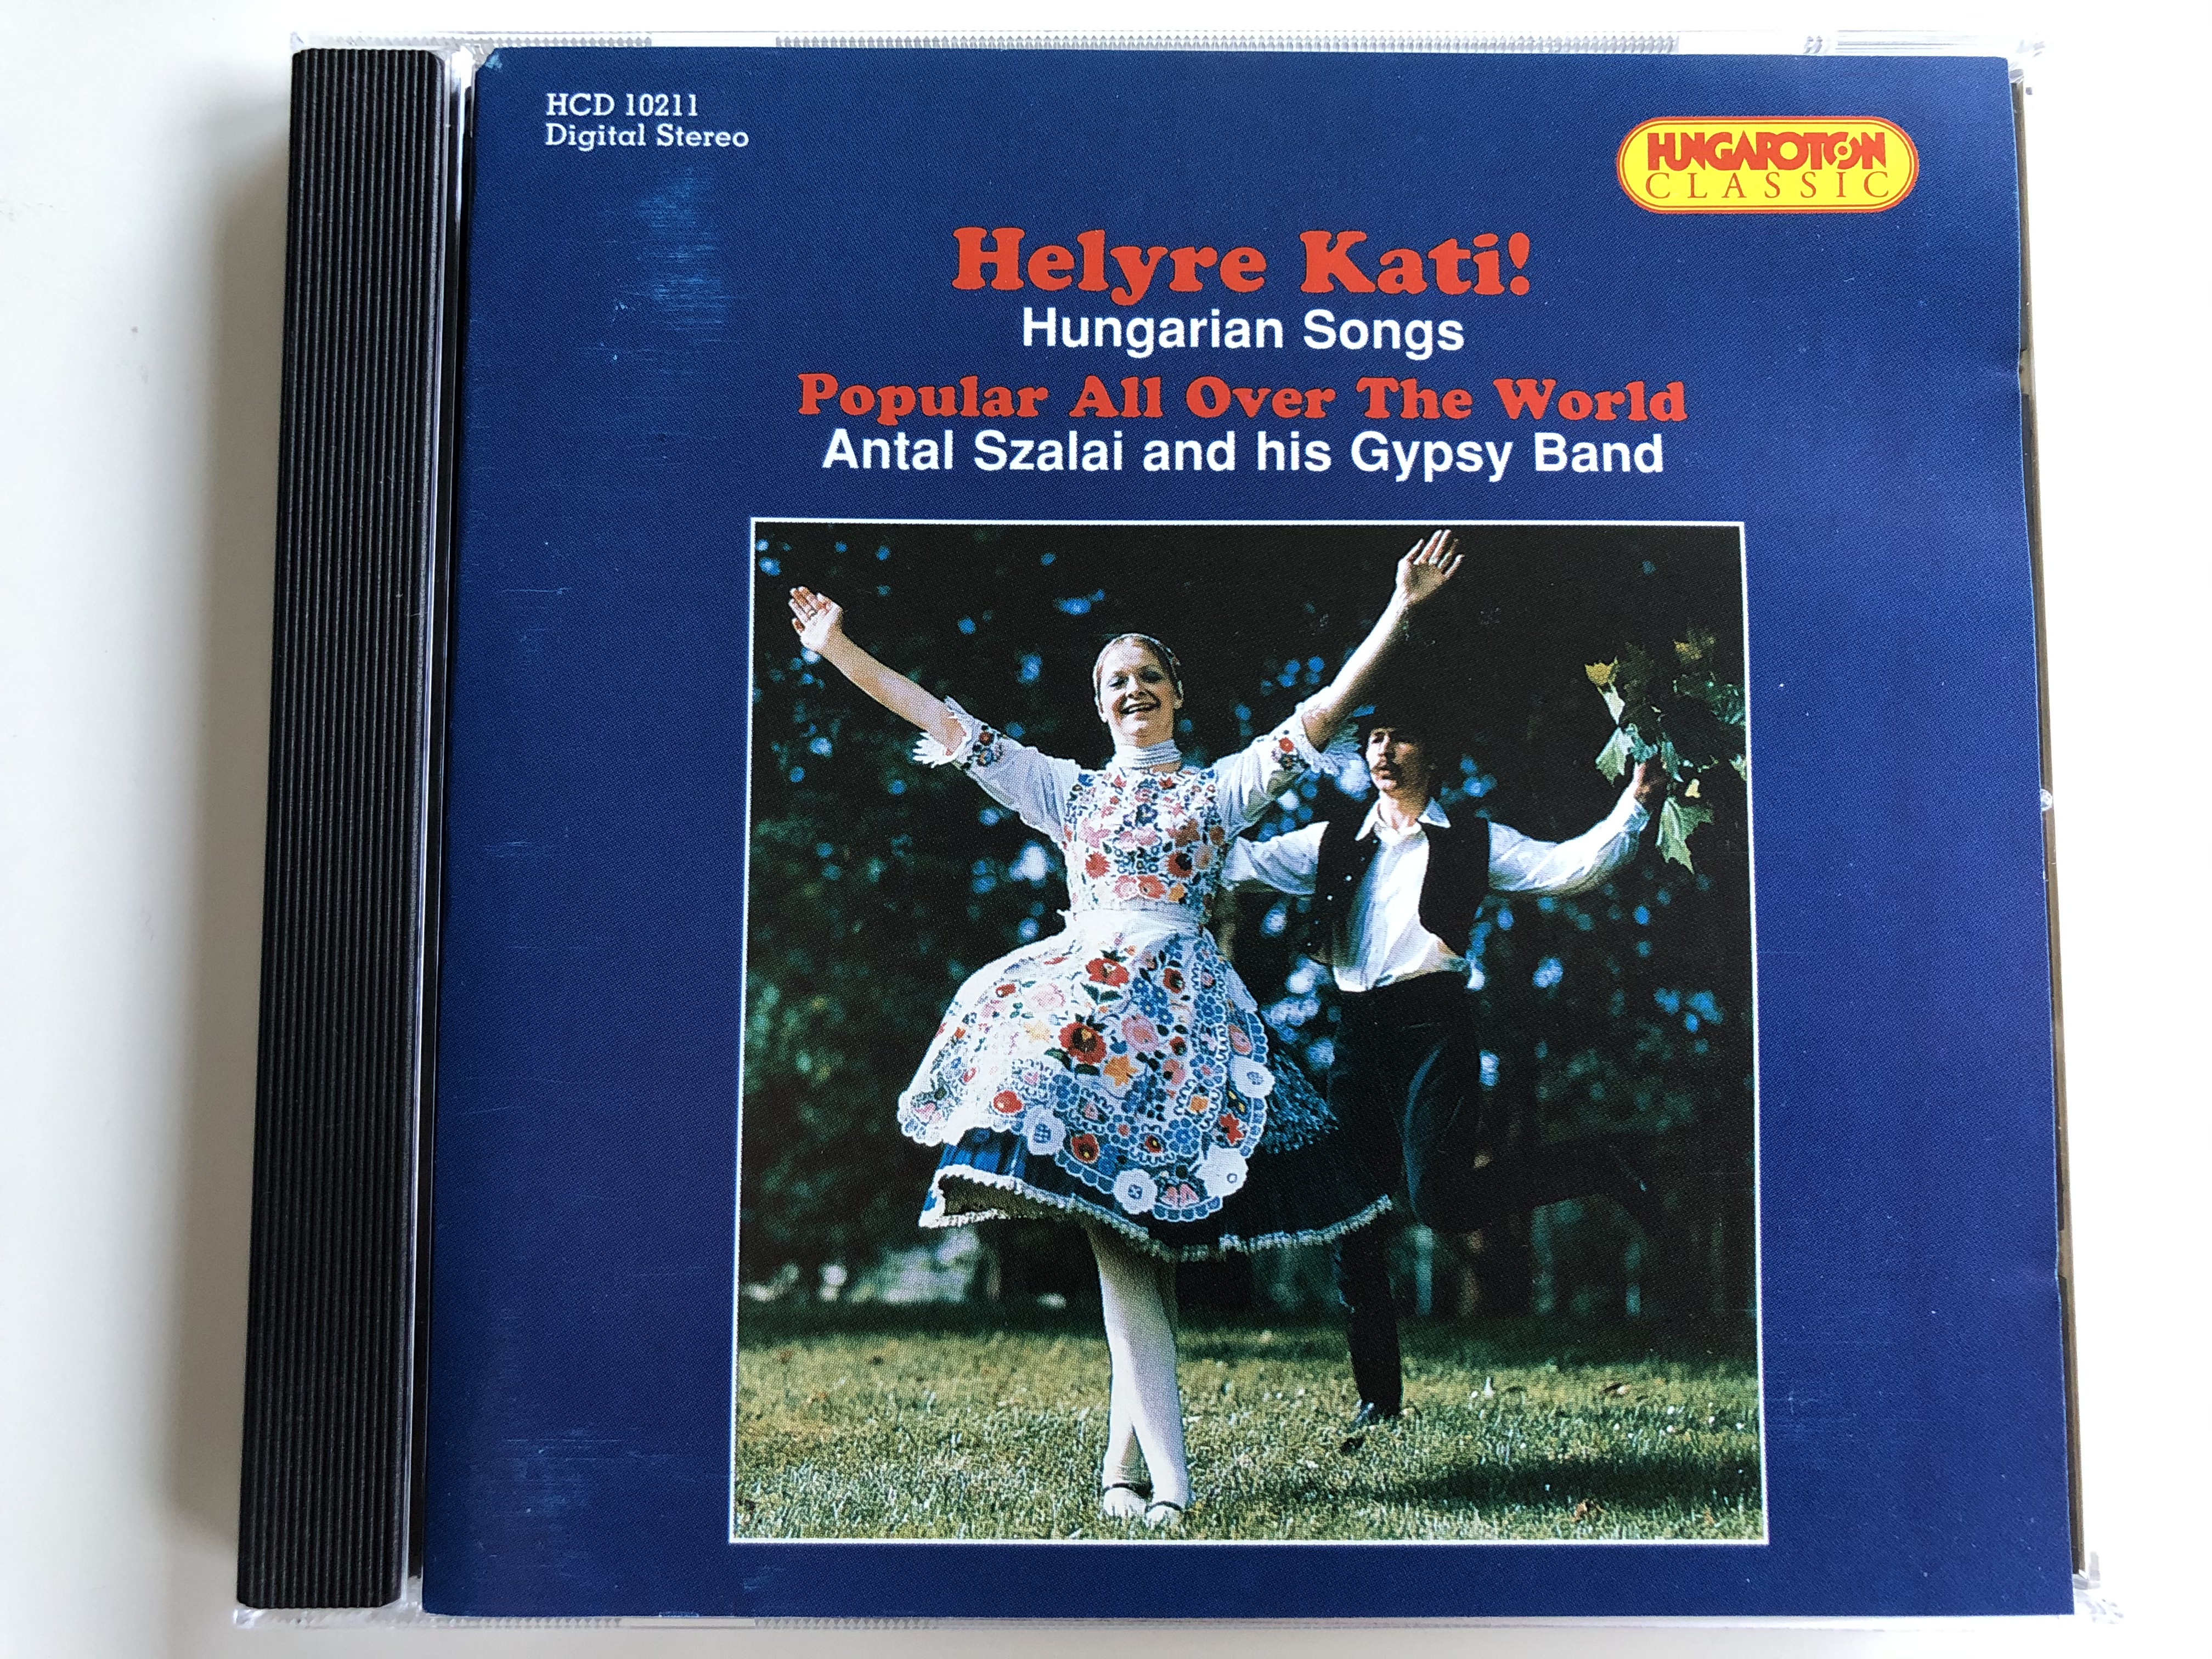 helyre-kati-hungarian-songs-popular-around-the-world-antal-szalai-and-his-gypsy-band-hungaroton-classic-audio-cd-1996-stereo-hcd-10211-1-.jpg